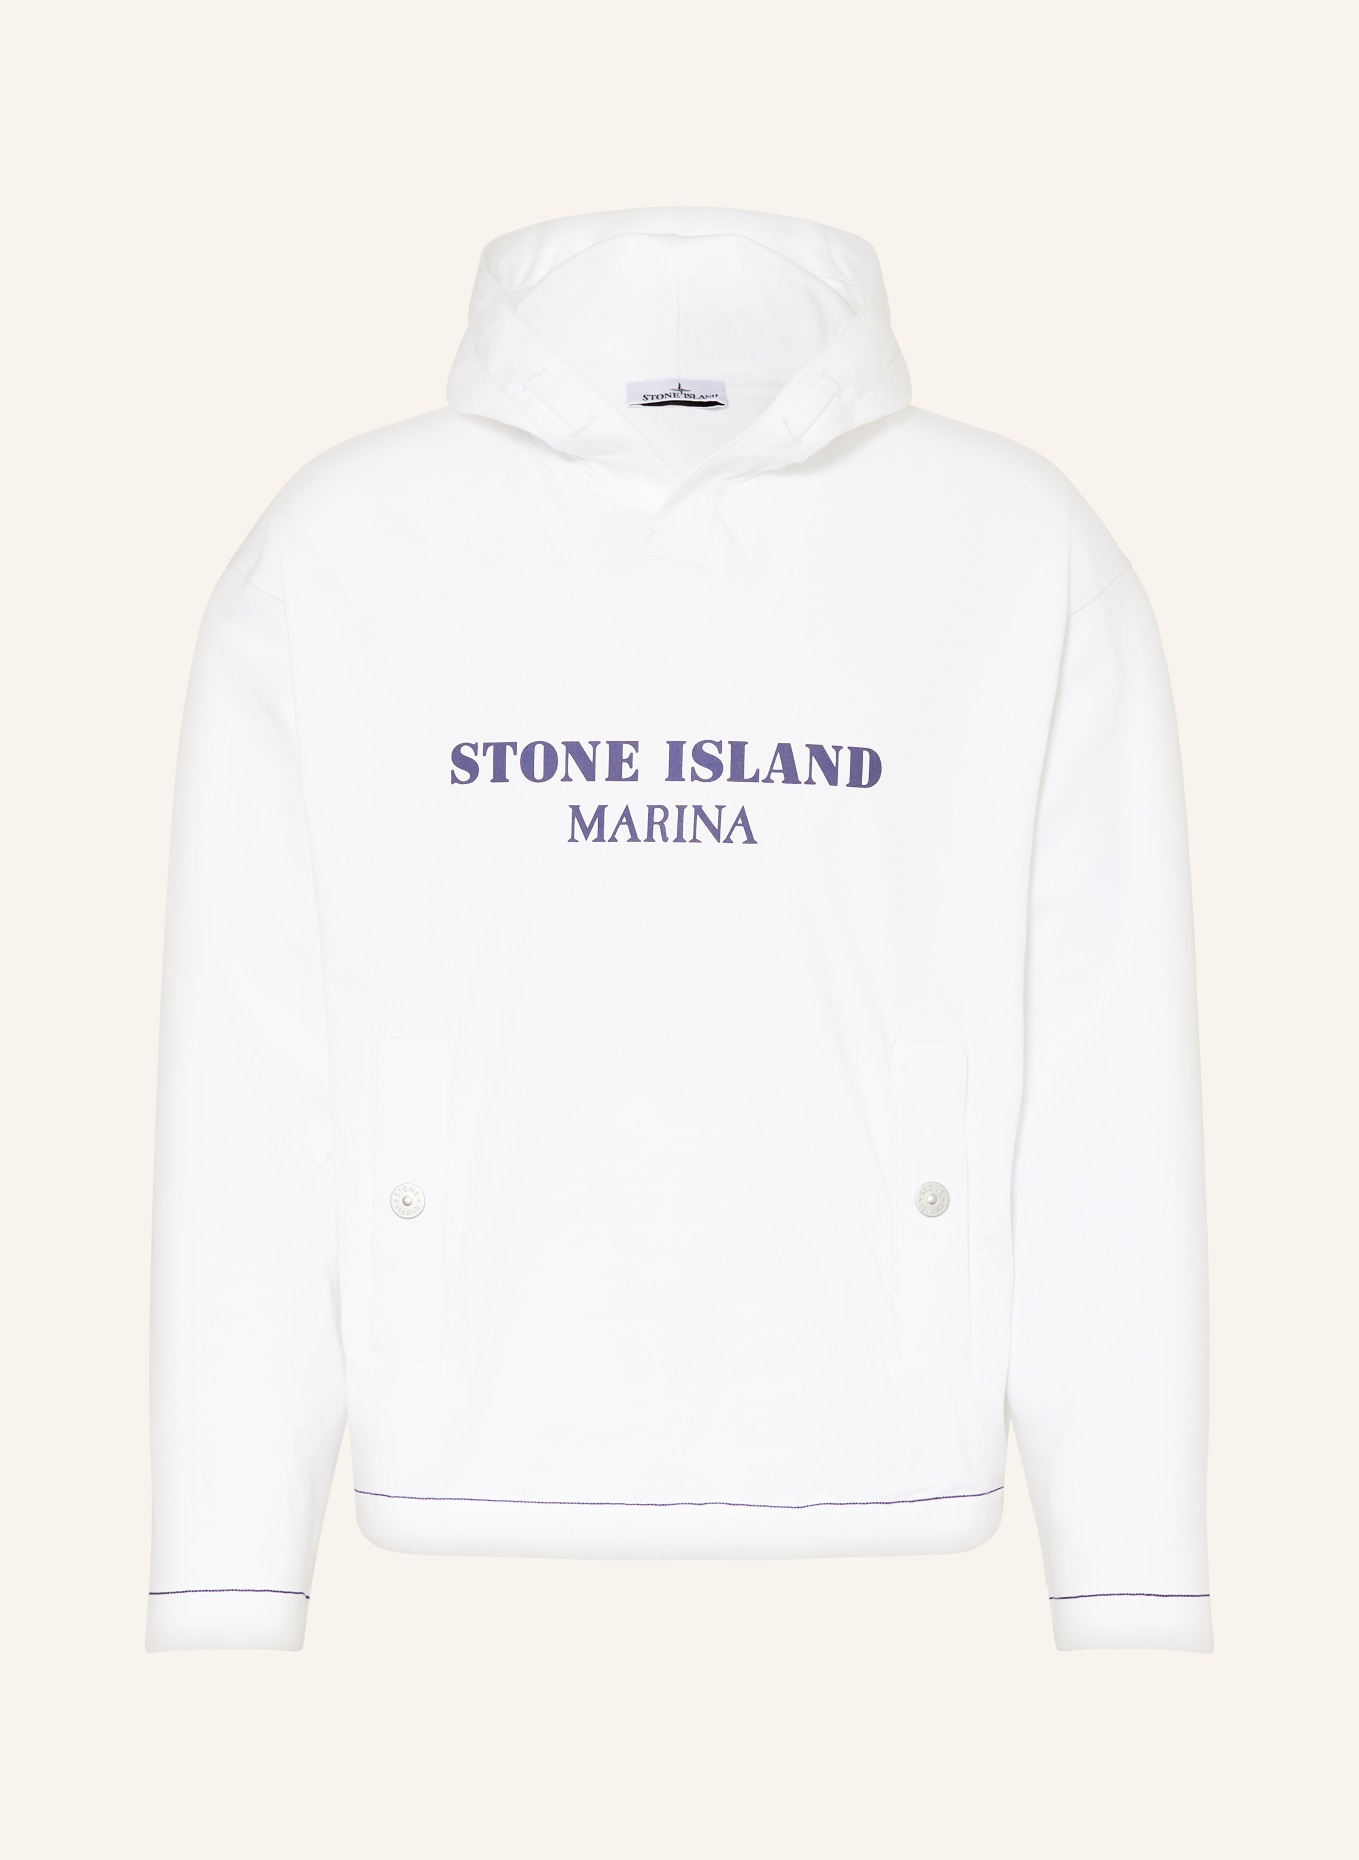 STONE ISLAND Oversized-Hoodie MARINA, Farbe: WEISS (Bild 1)